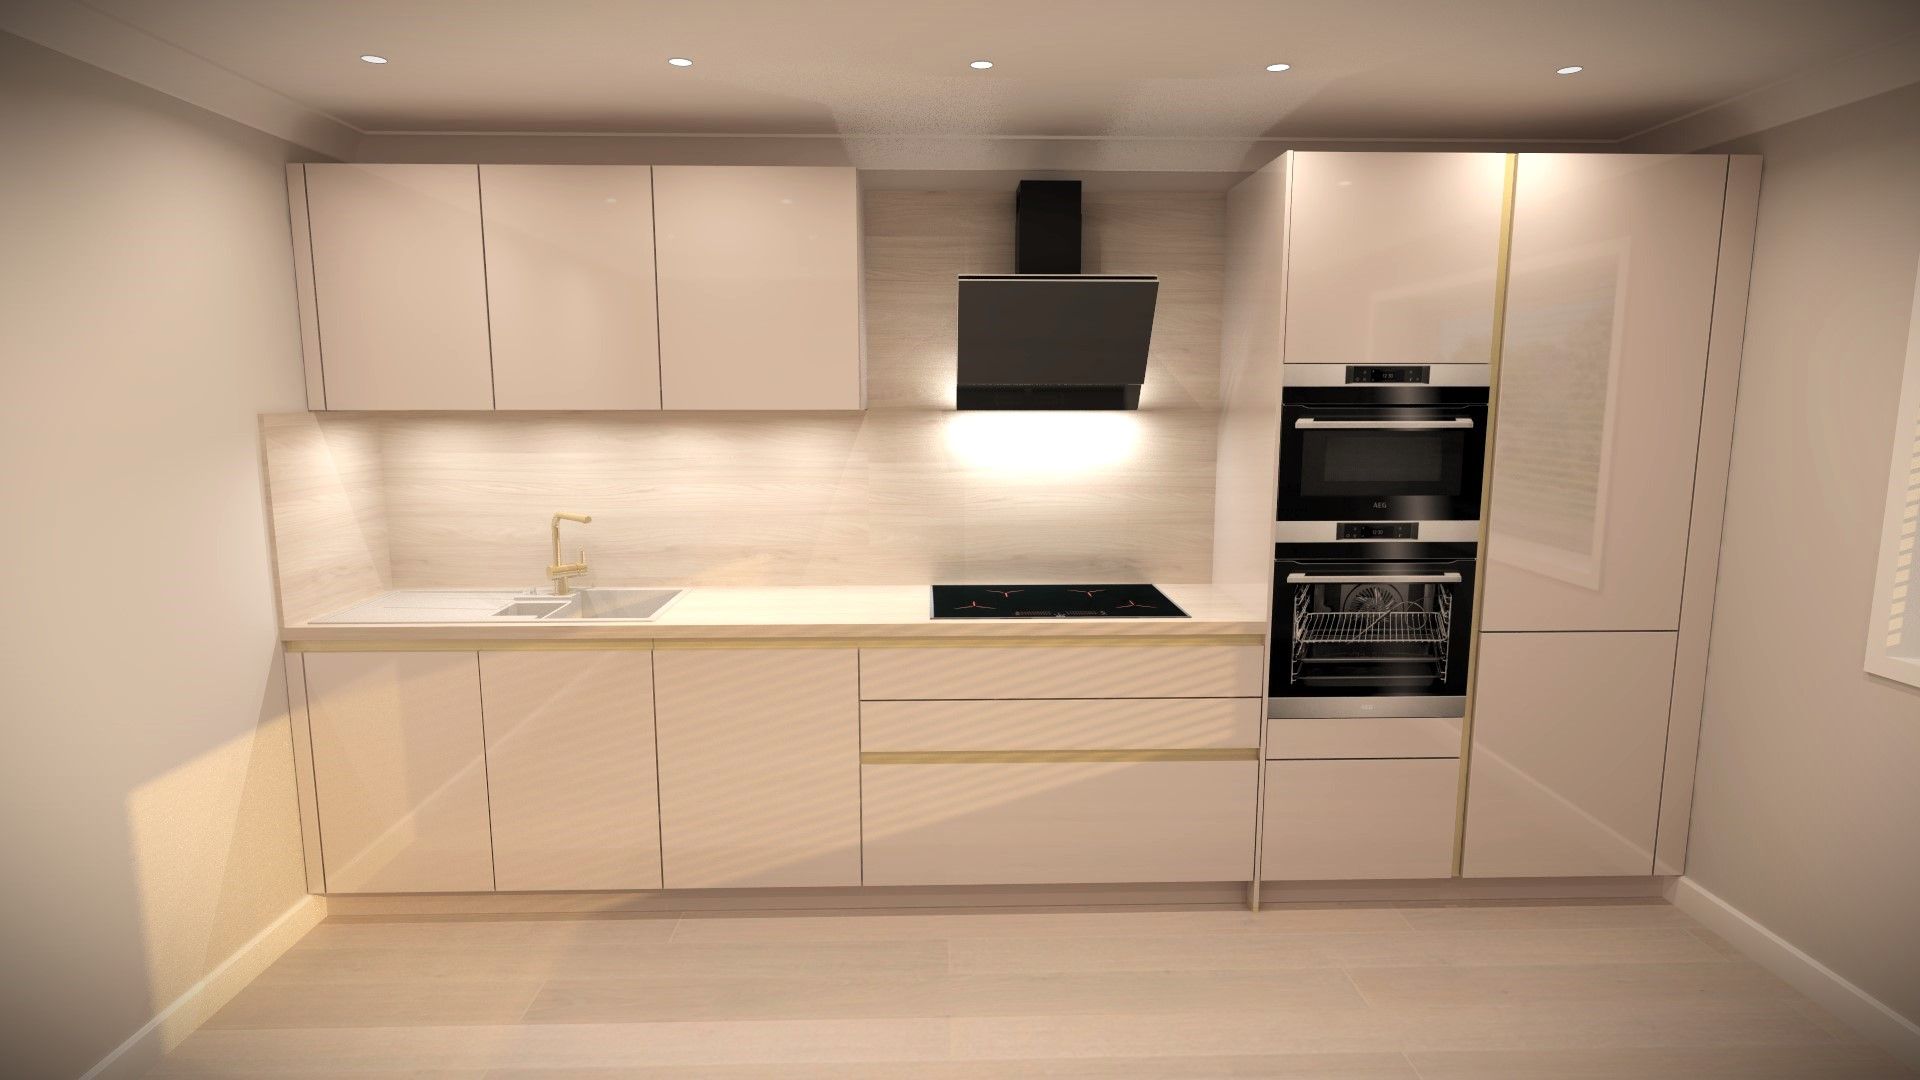 Light and modern handless kitchen units
